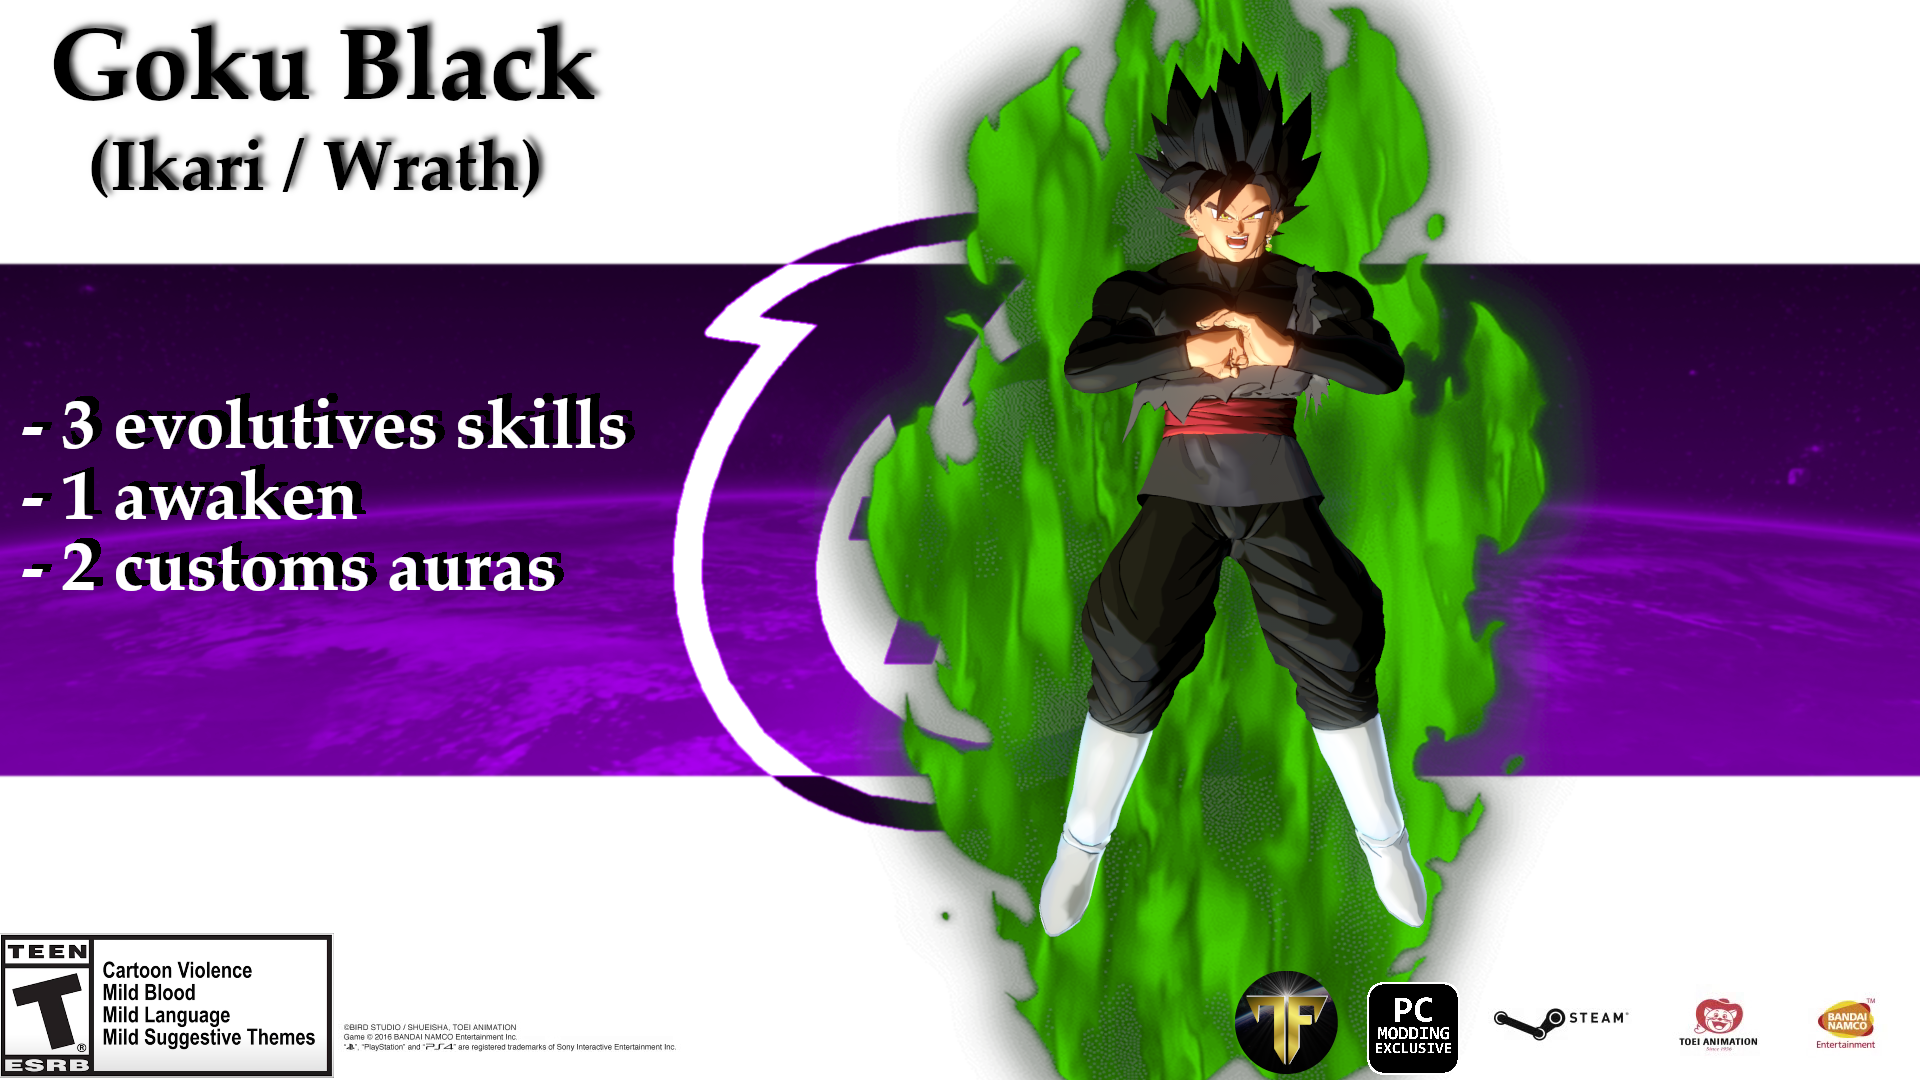 Goku Black (Ikari / Wrath)